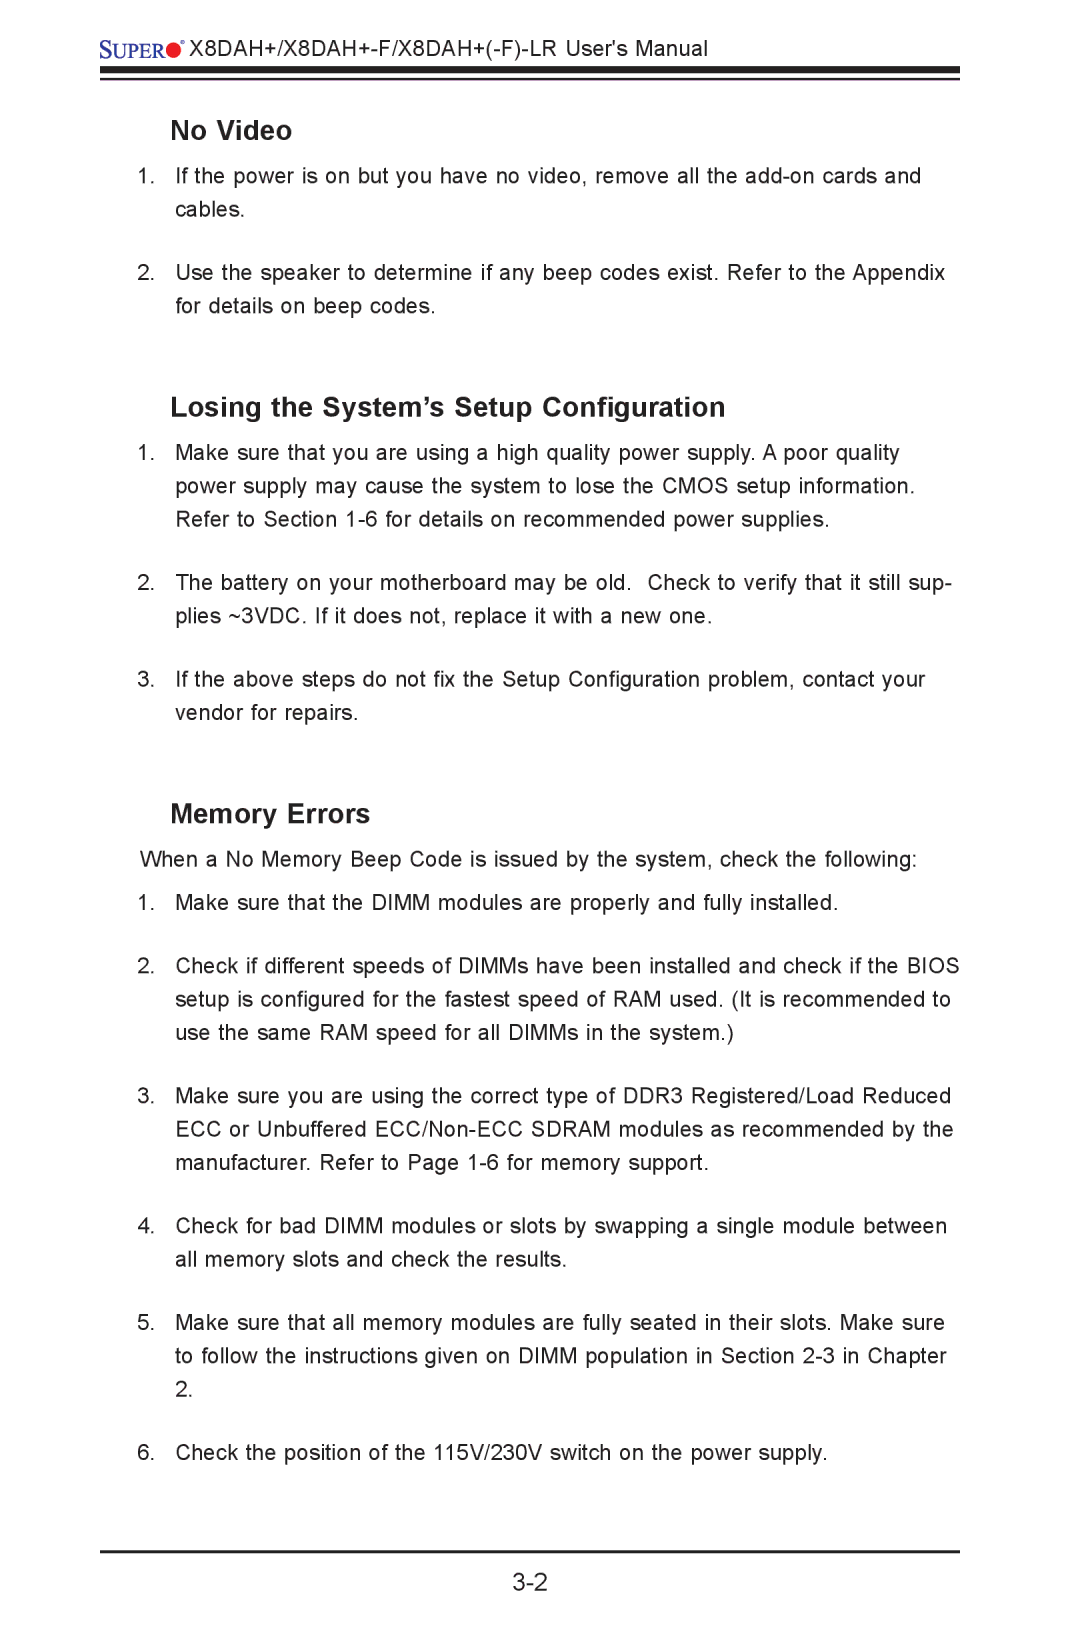 SUPER MICRO Computer 1.2b user manual No Video, Losing the System’s Setup Configuration, Memory Errors 